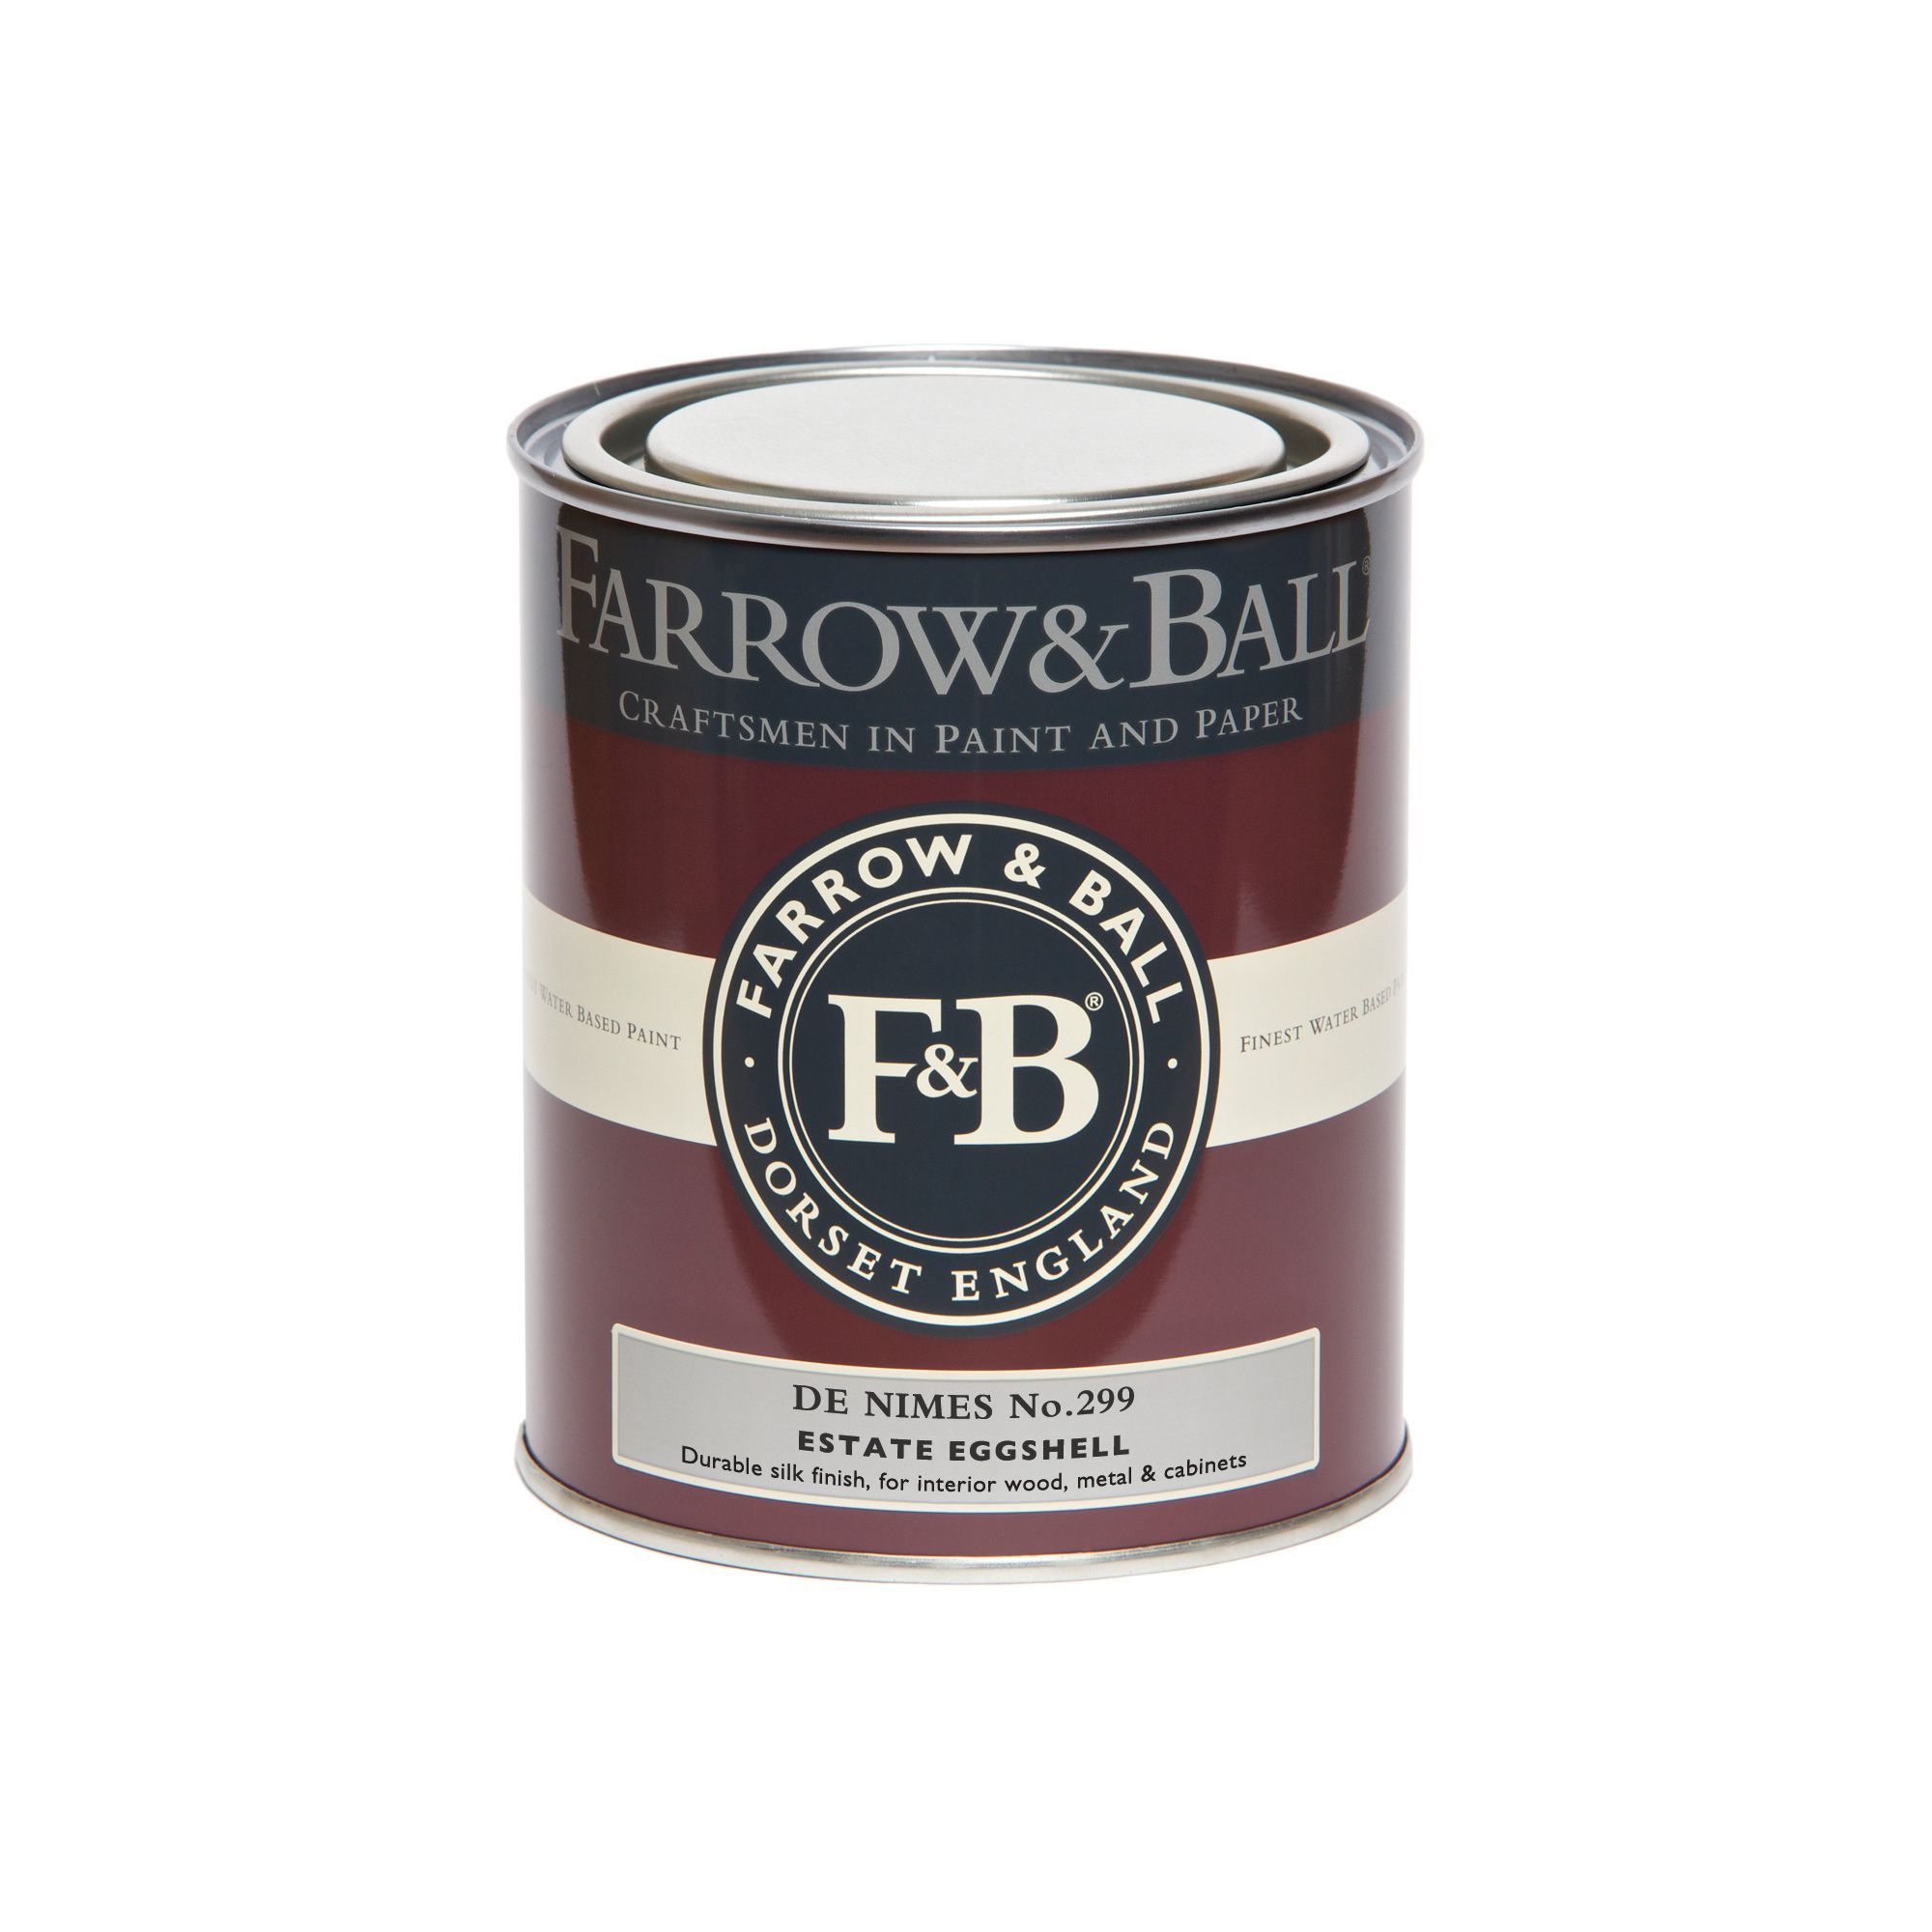 Farrow & Ball Estate De nimes No.299 Eggshell Metal & wood paint, 750ml